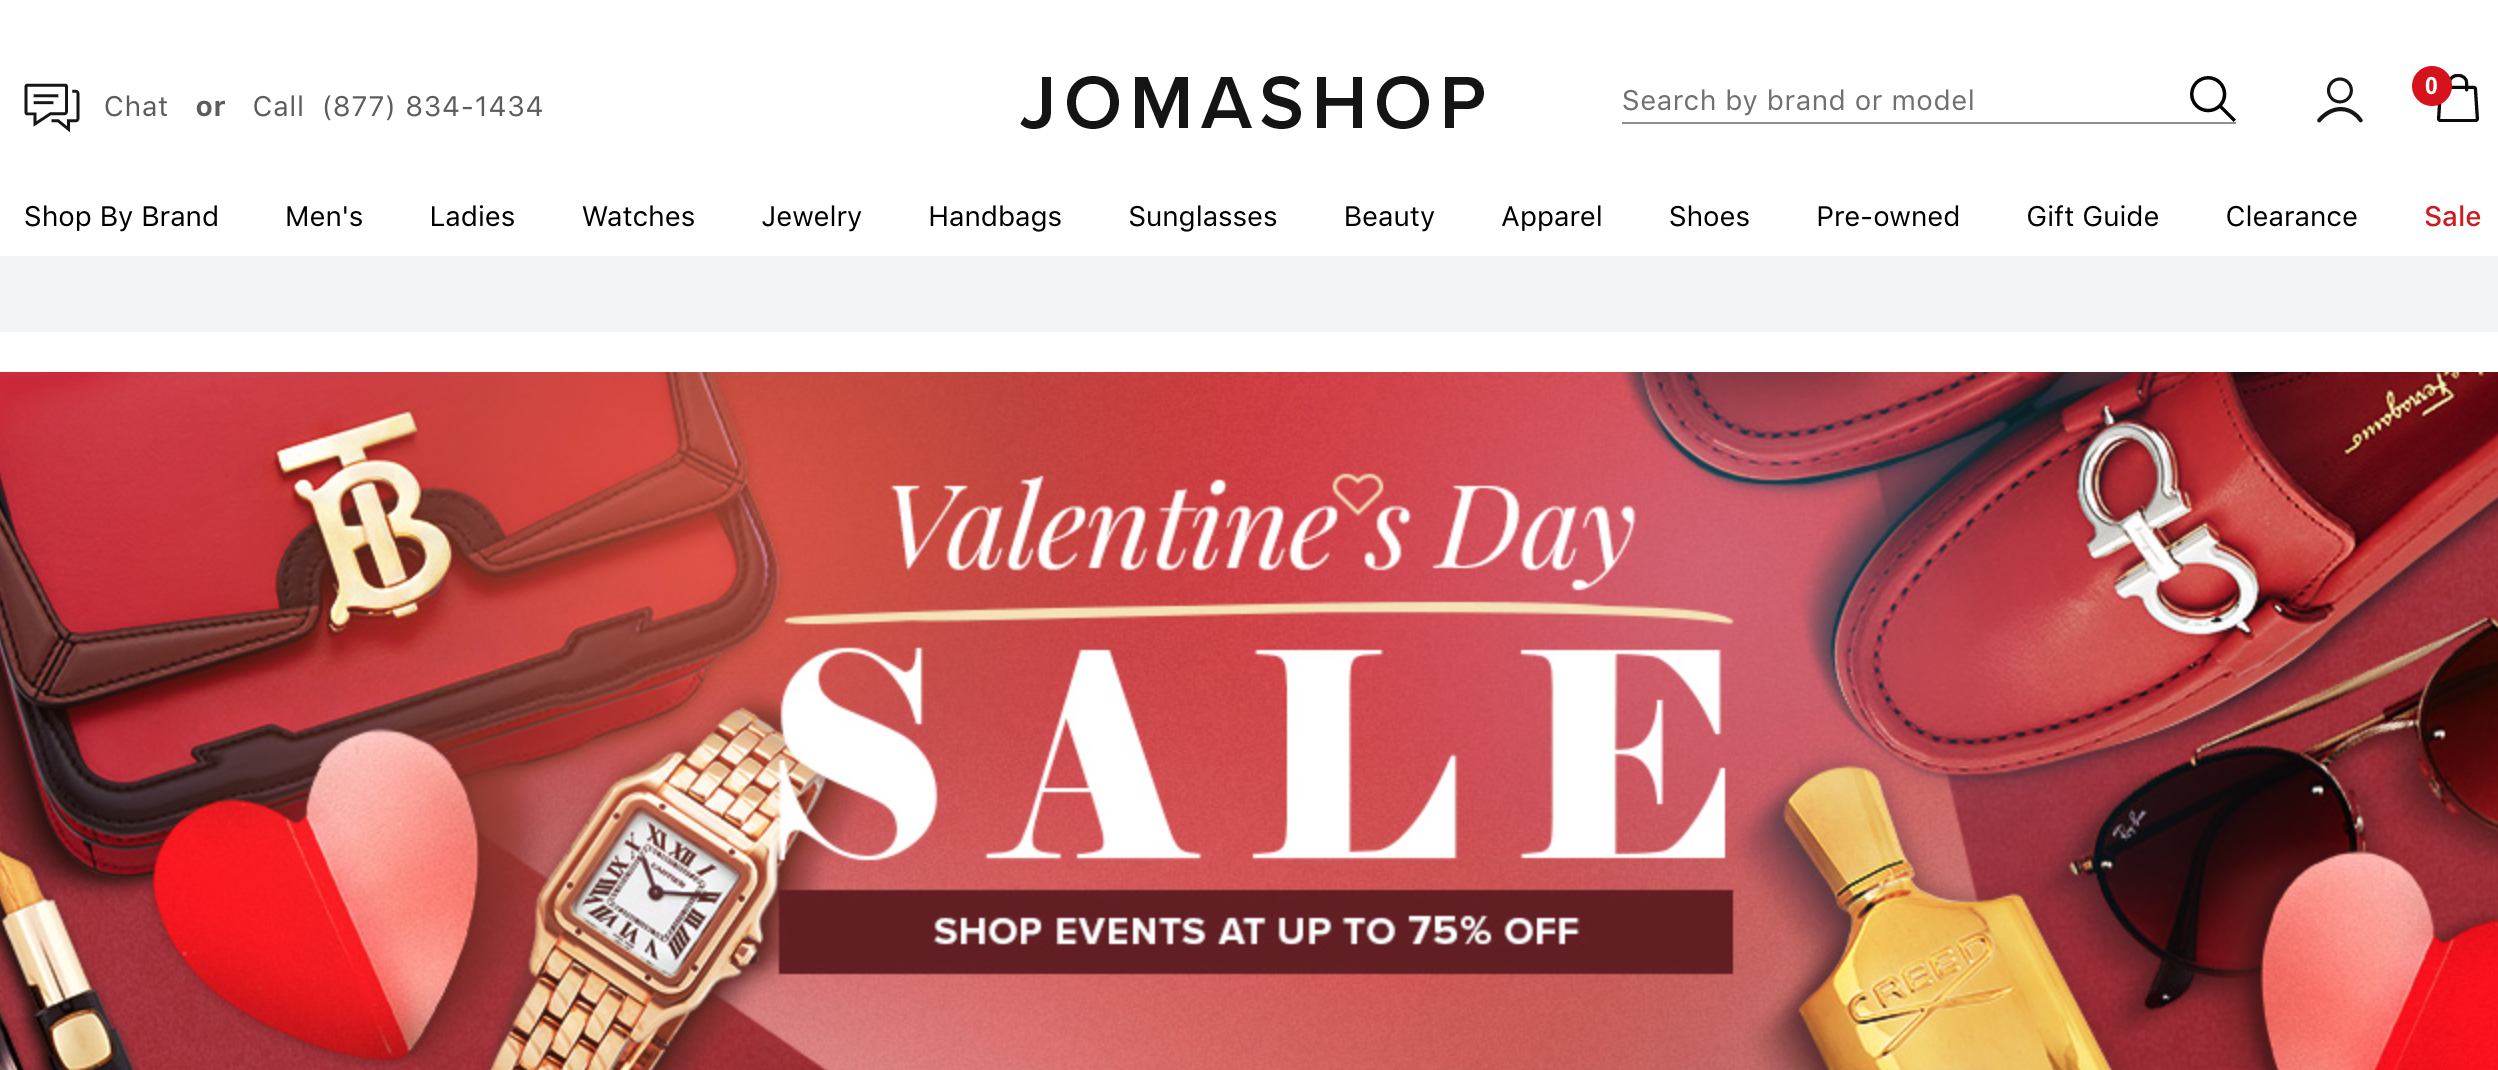 jomashop官网,美国海淘手表网站